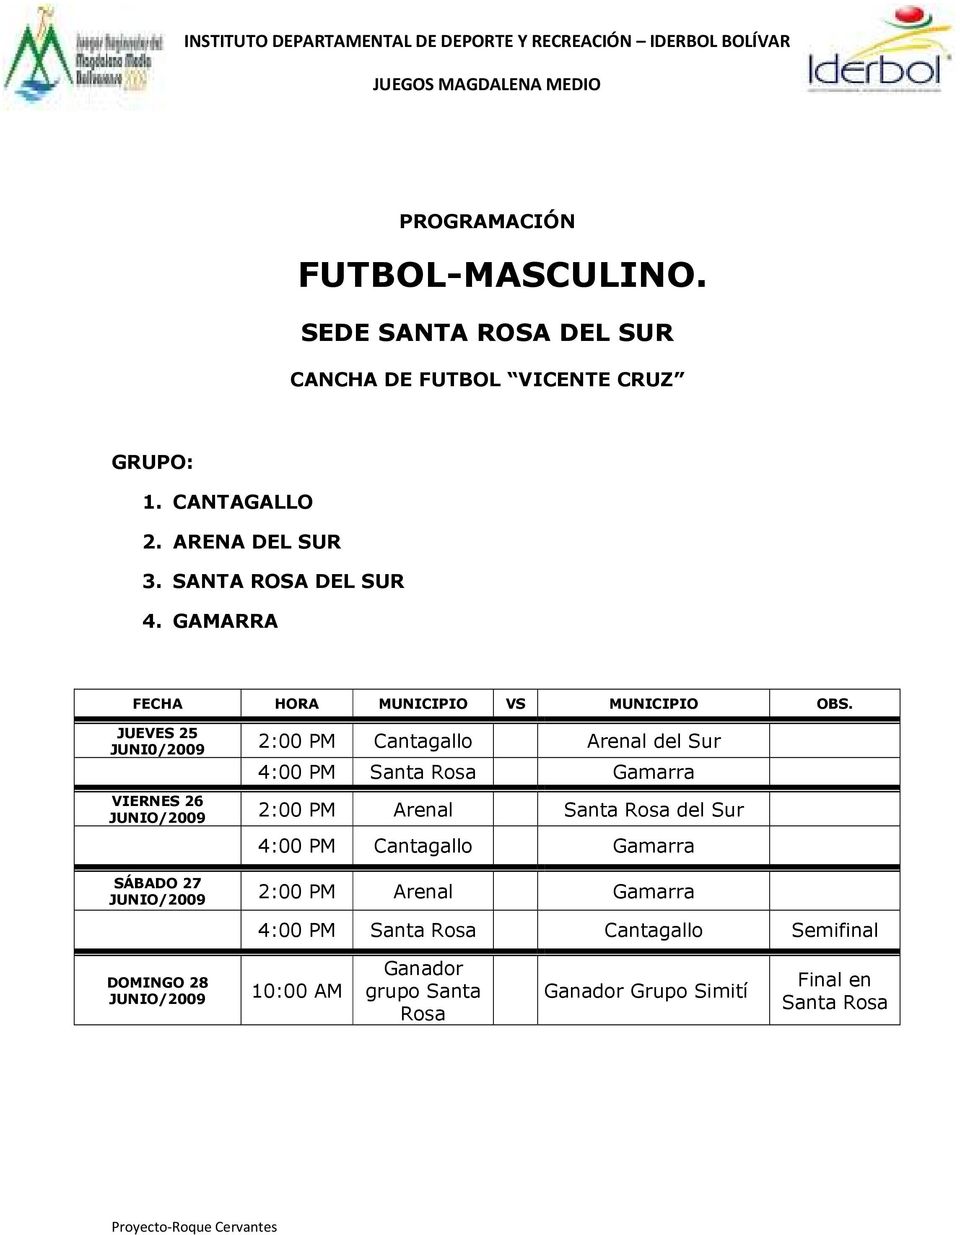 GAMARRA 2:00 PM Cantagallo Arenal del Sur 4:00 PM Santa Rosa Gamarra 2:00 PM Arenal Santa Rosa